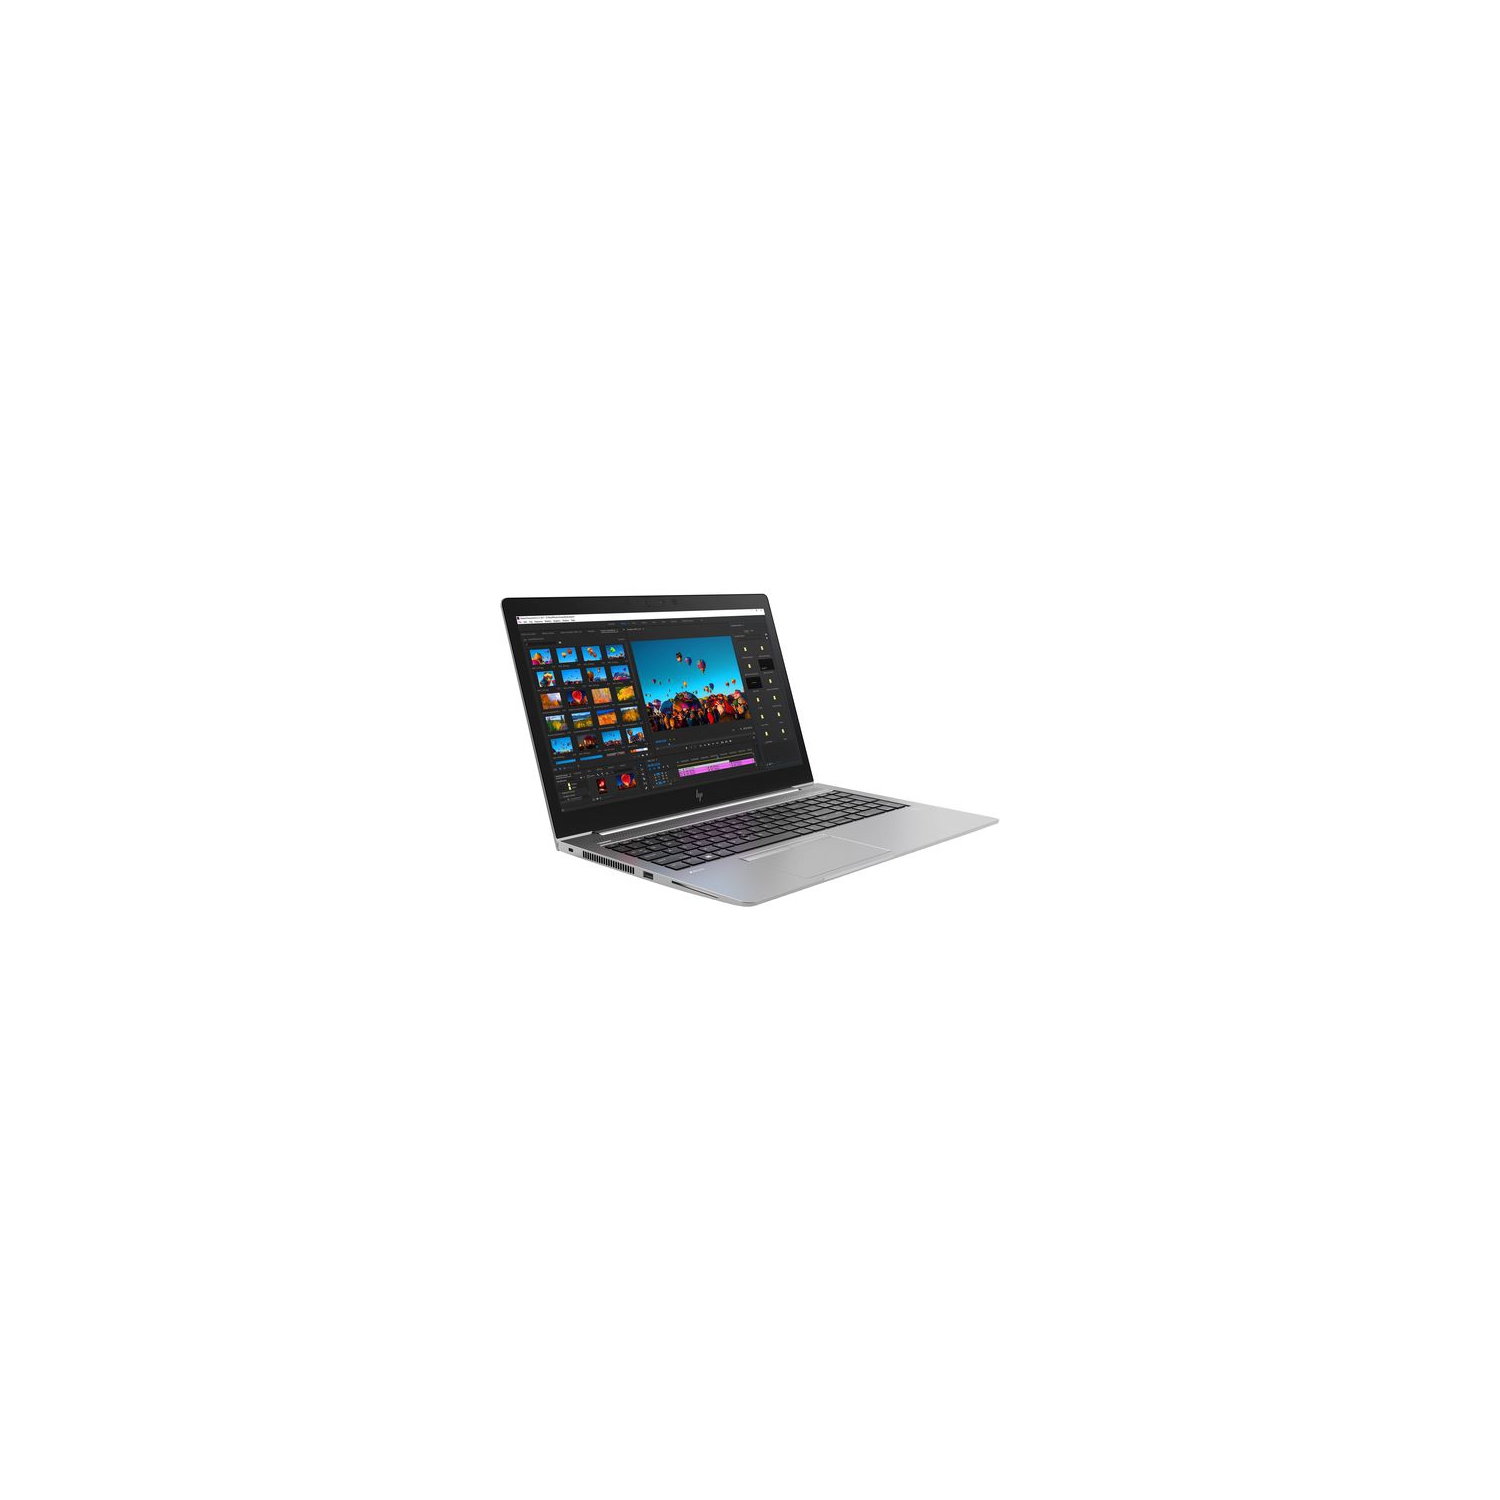 HP ZBook 15u G5 15.6" Laptop - Silver (Intel Core i7-8550U / 512GB SSD / 16GB RAM / Windows 10) - (3YW02UT#ABL)